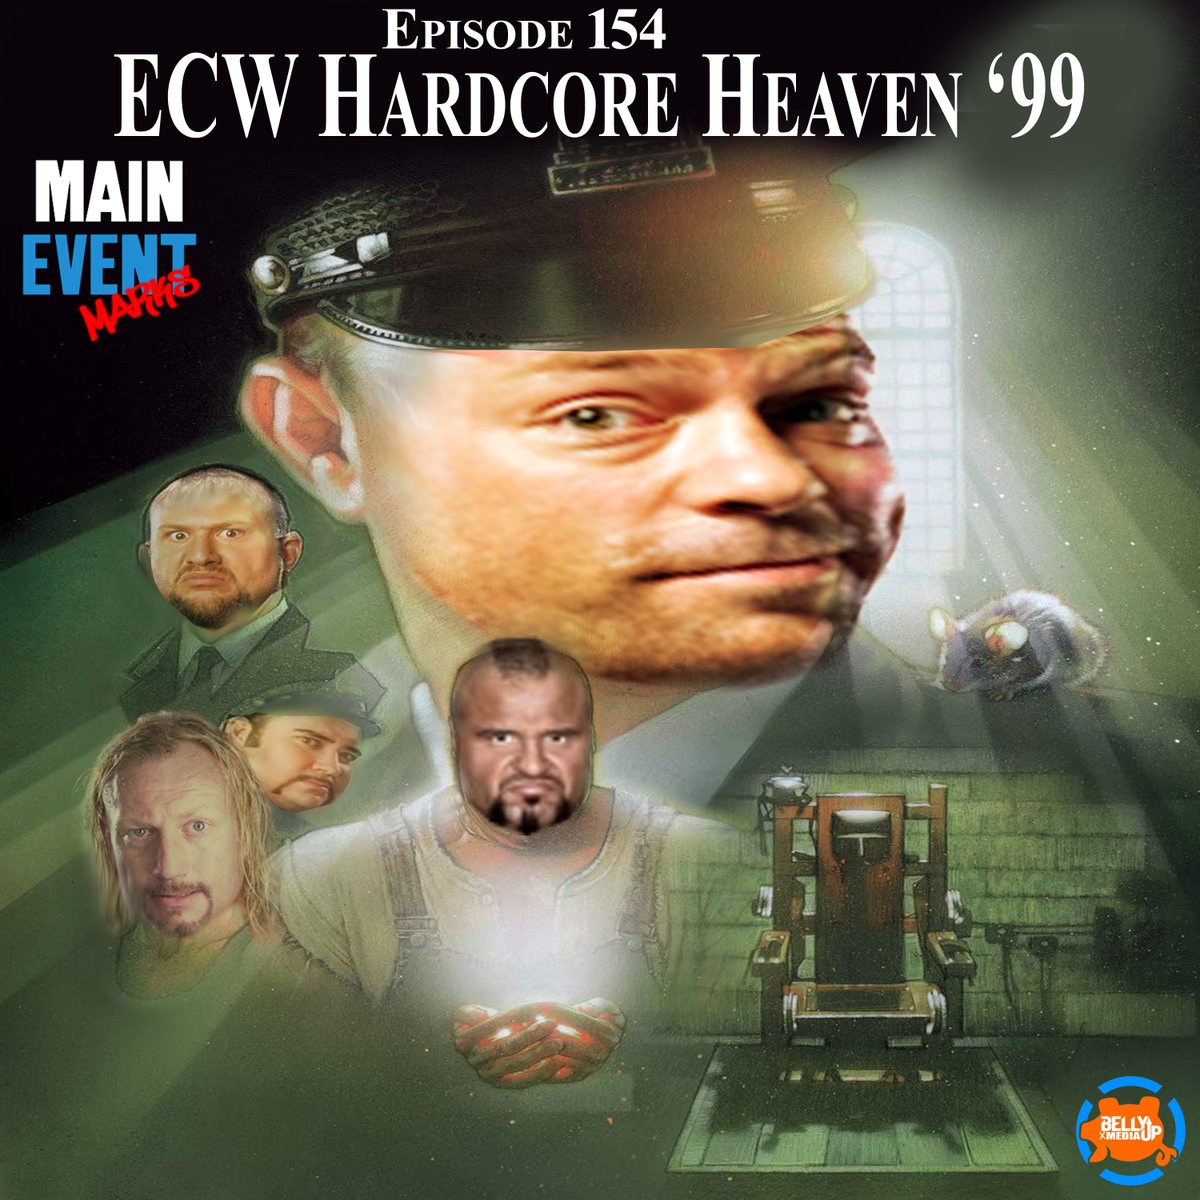 NEW EPISODE 'Episode 154: ECW Hardcore Heaven '99'

COHOSTS: Troy & @athleticfan33

PROMOS: @HPuckberg @TheBroKast @tssfantasy @NoCredsReq @ApronBump

NETWORK: @RadioBURNS & @BellyUpMedia
#podcast #AEW #AEWDynamite #AEWonTBS #WWE #WWF #ECW #RVD #RobVanDam
podtrac.com/pts/redirect.m…